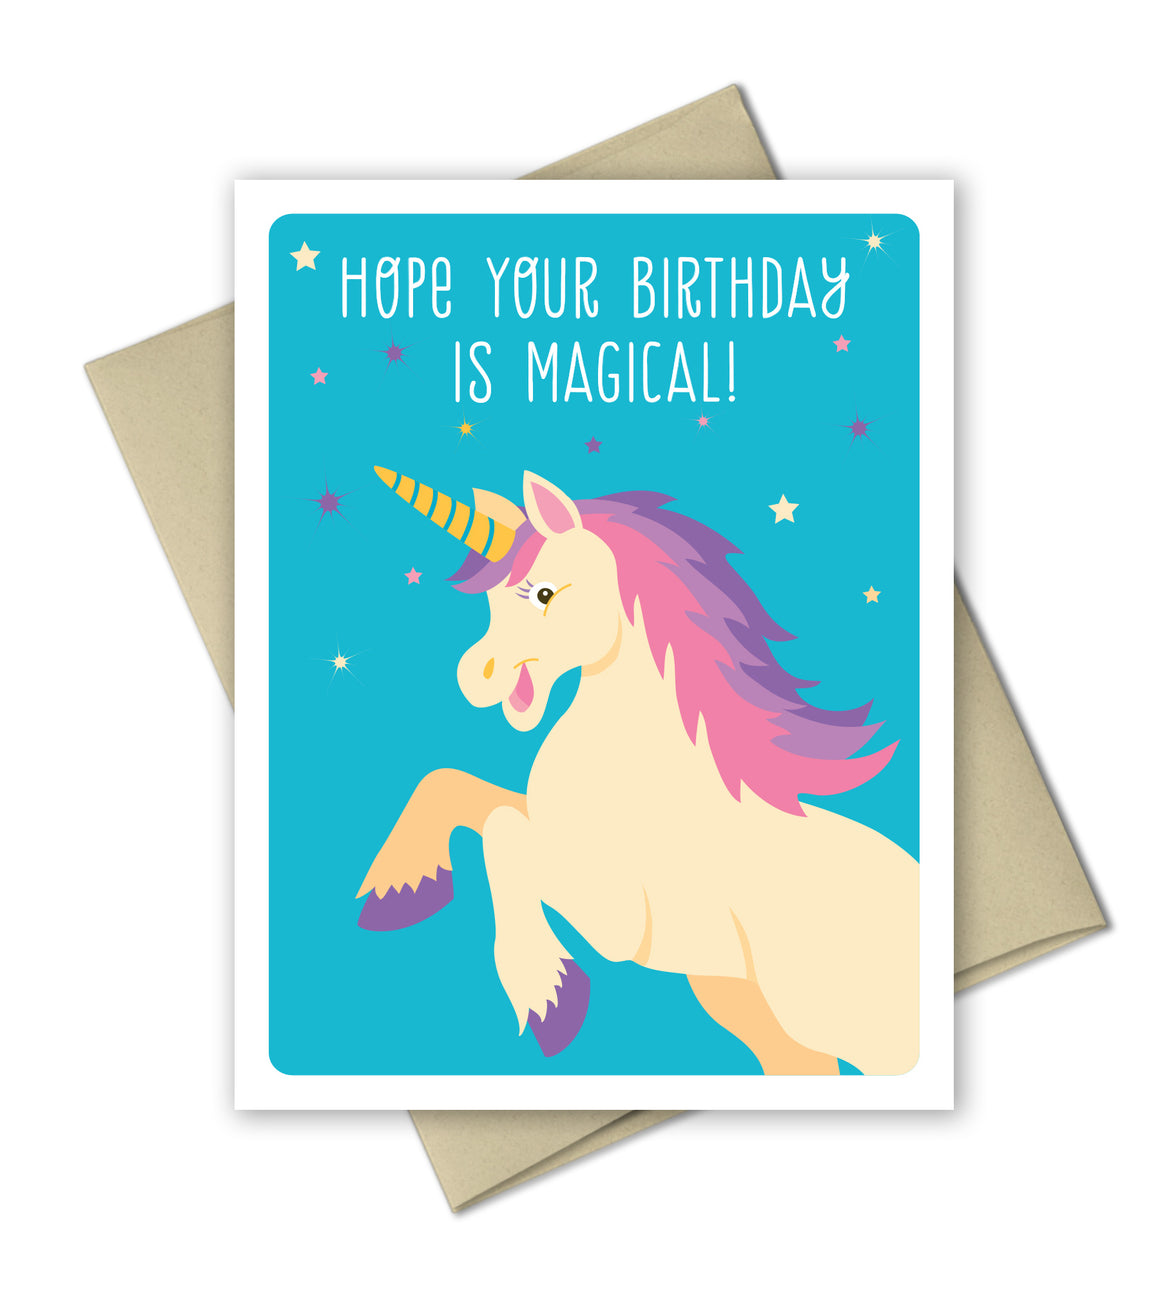 Unicorn Birthday Card - Magical Birthday by The Imagination Spot - The Imagination Spot